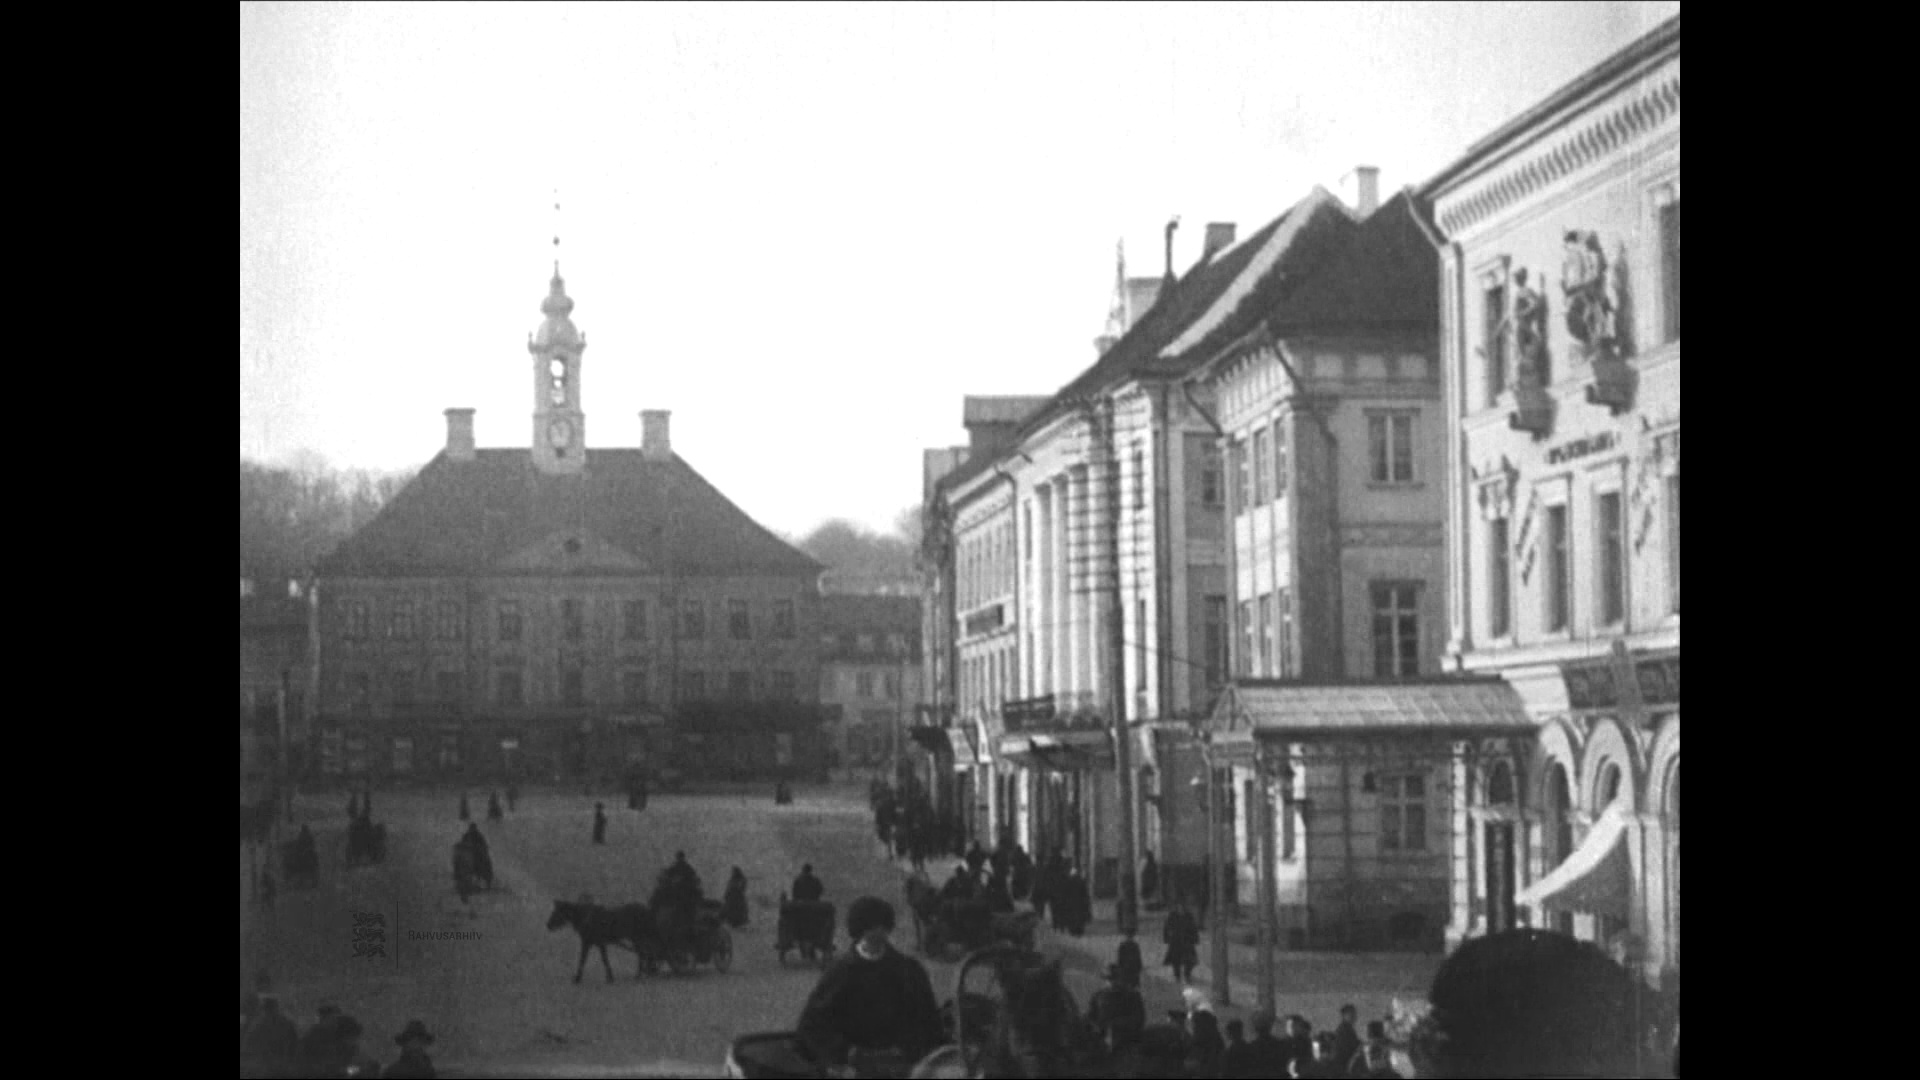 Film "Tartu city and surroundings" 0:01:49.866